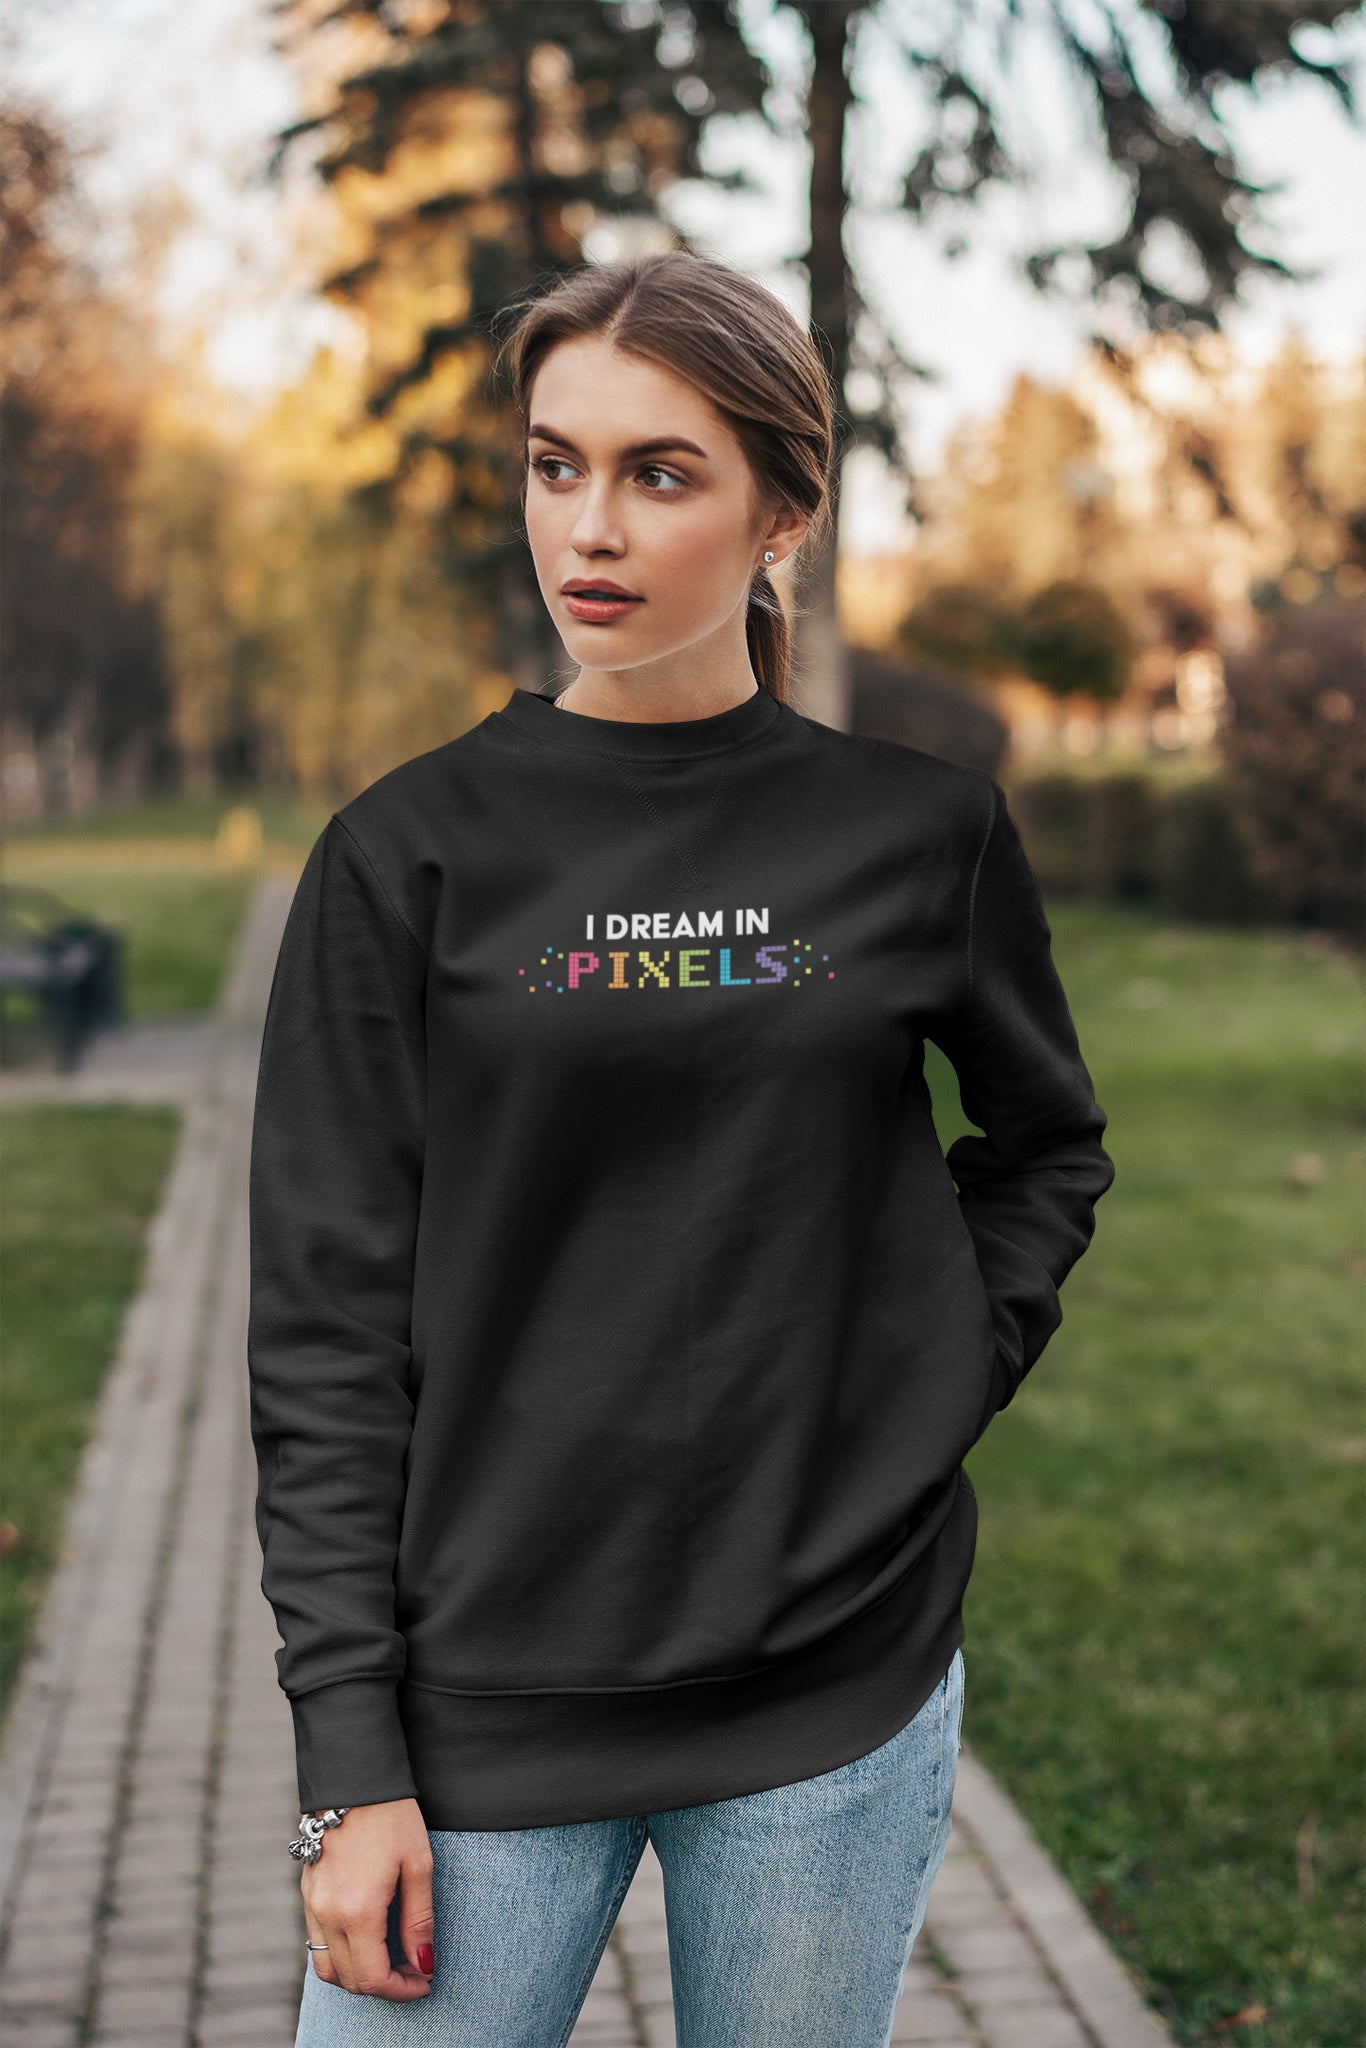 I Dream In Pixels Unisex Sweatshirt